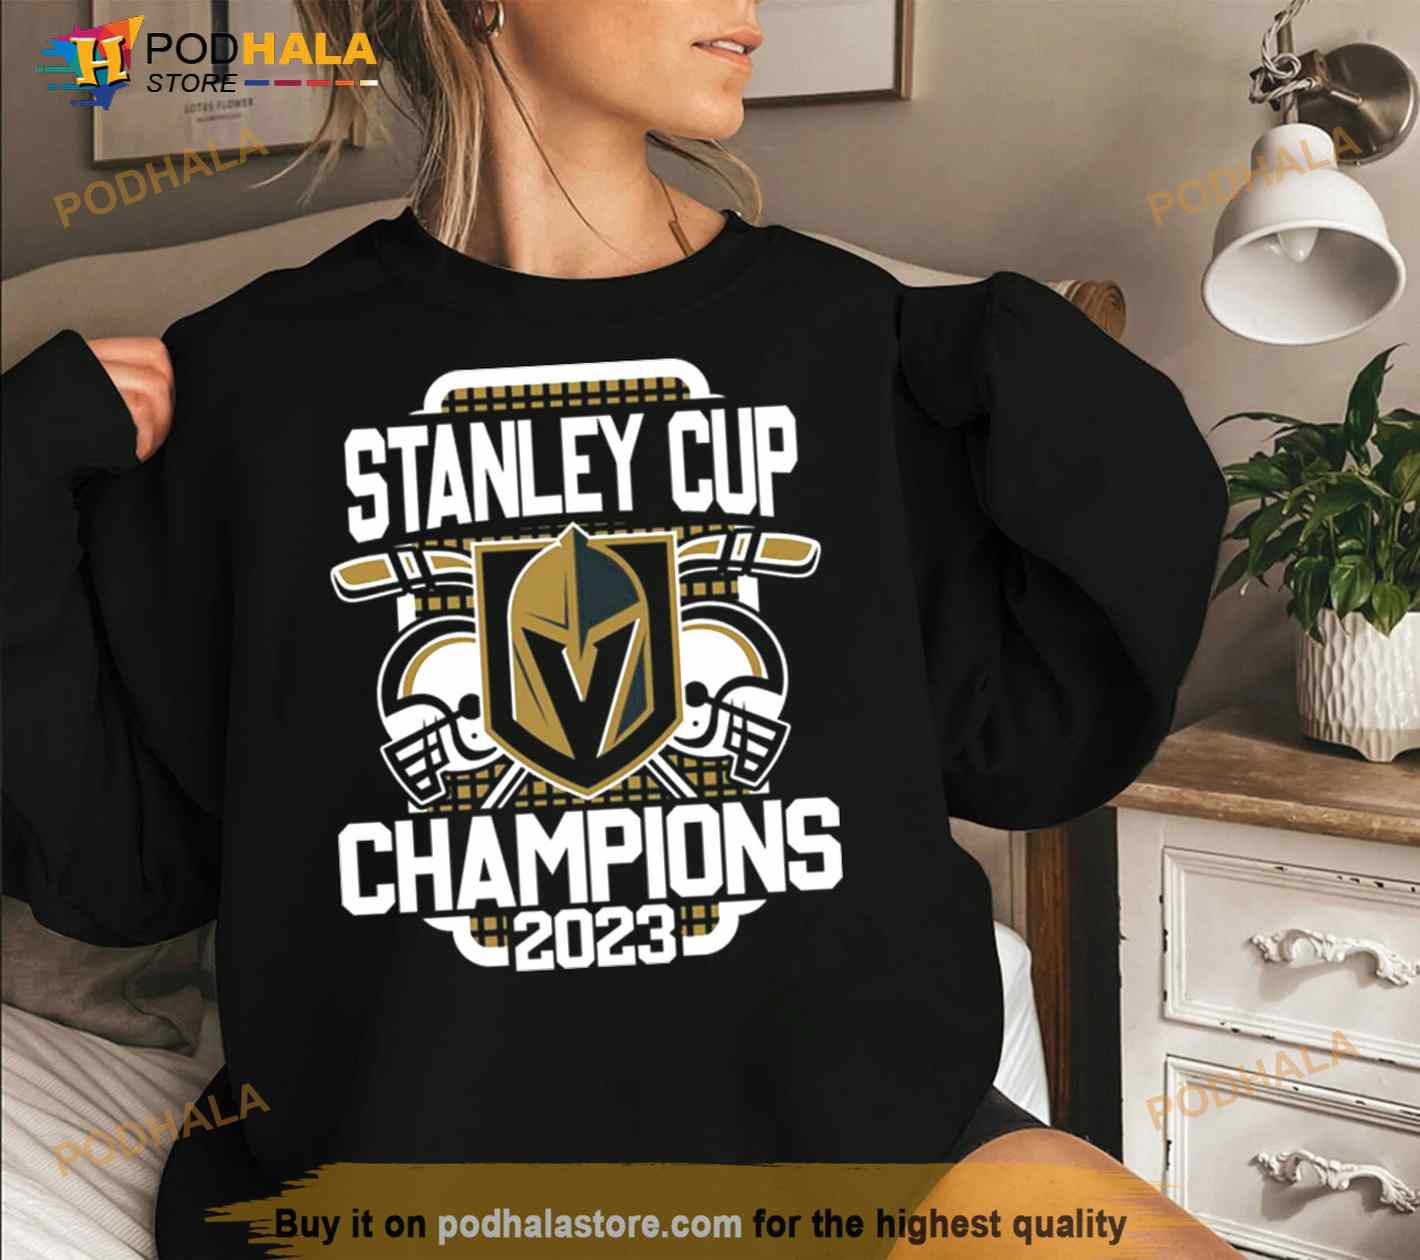 Las Vegas Golden Knights 2023 Champions T-Shirt - T-shirts Low Price